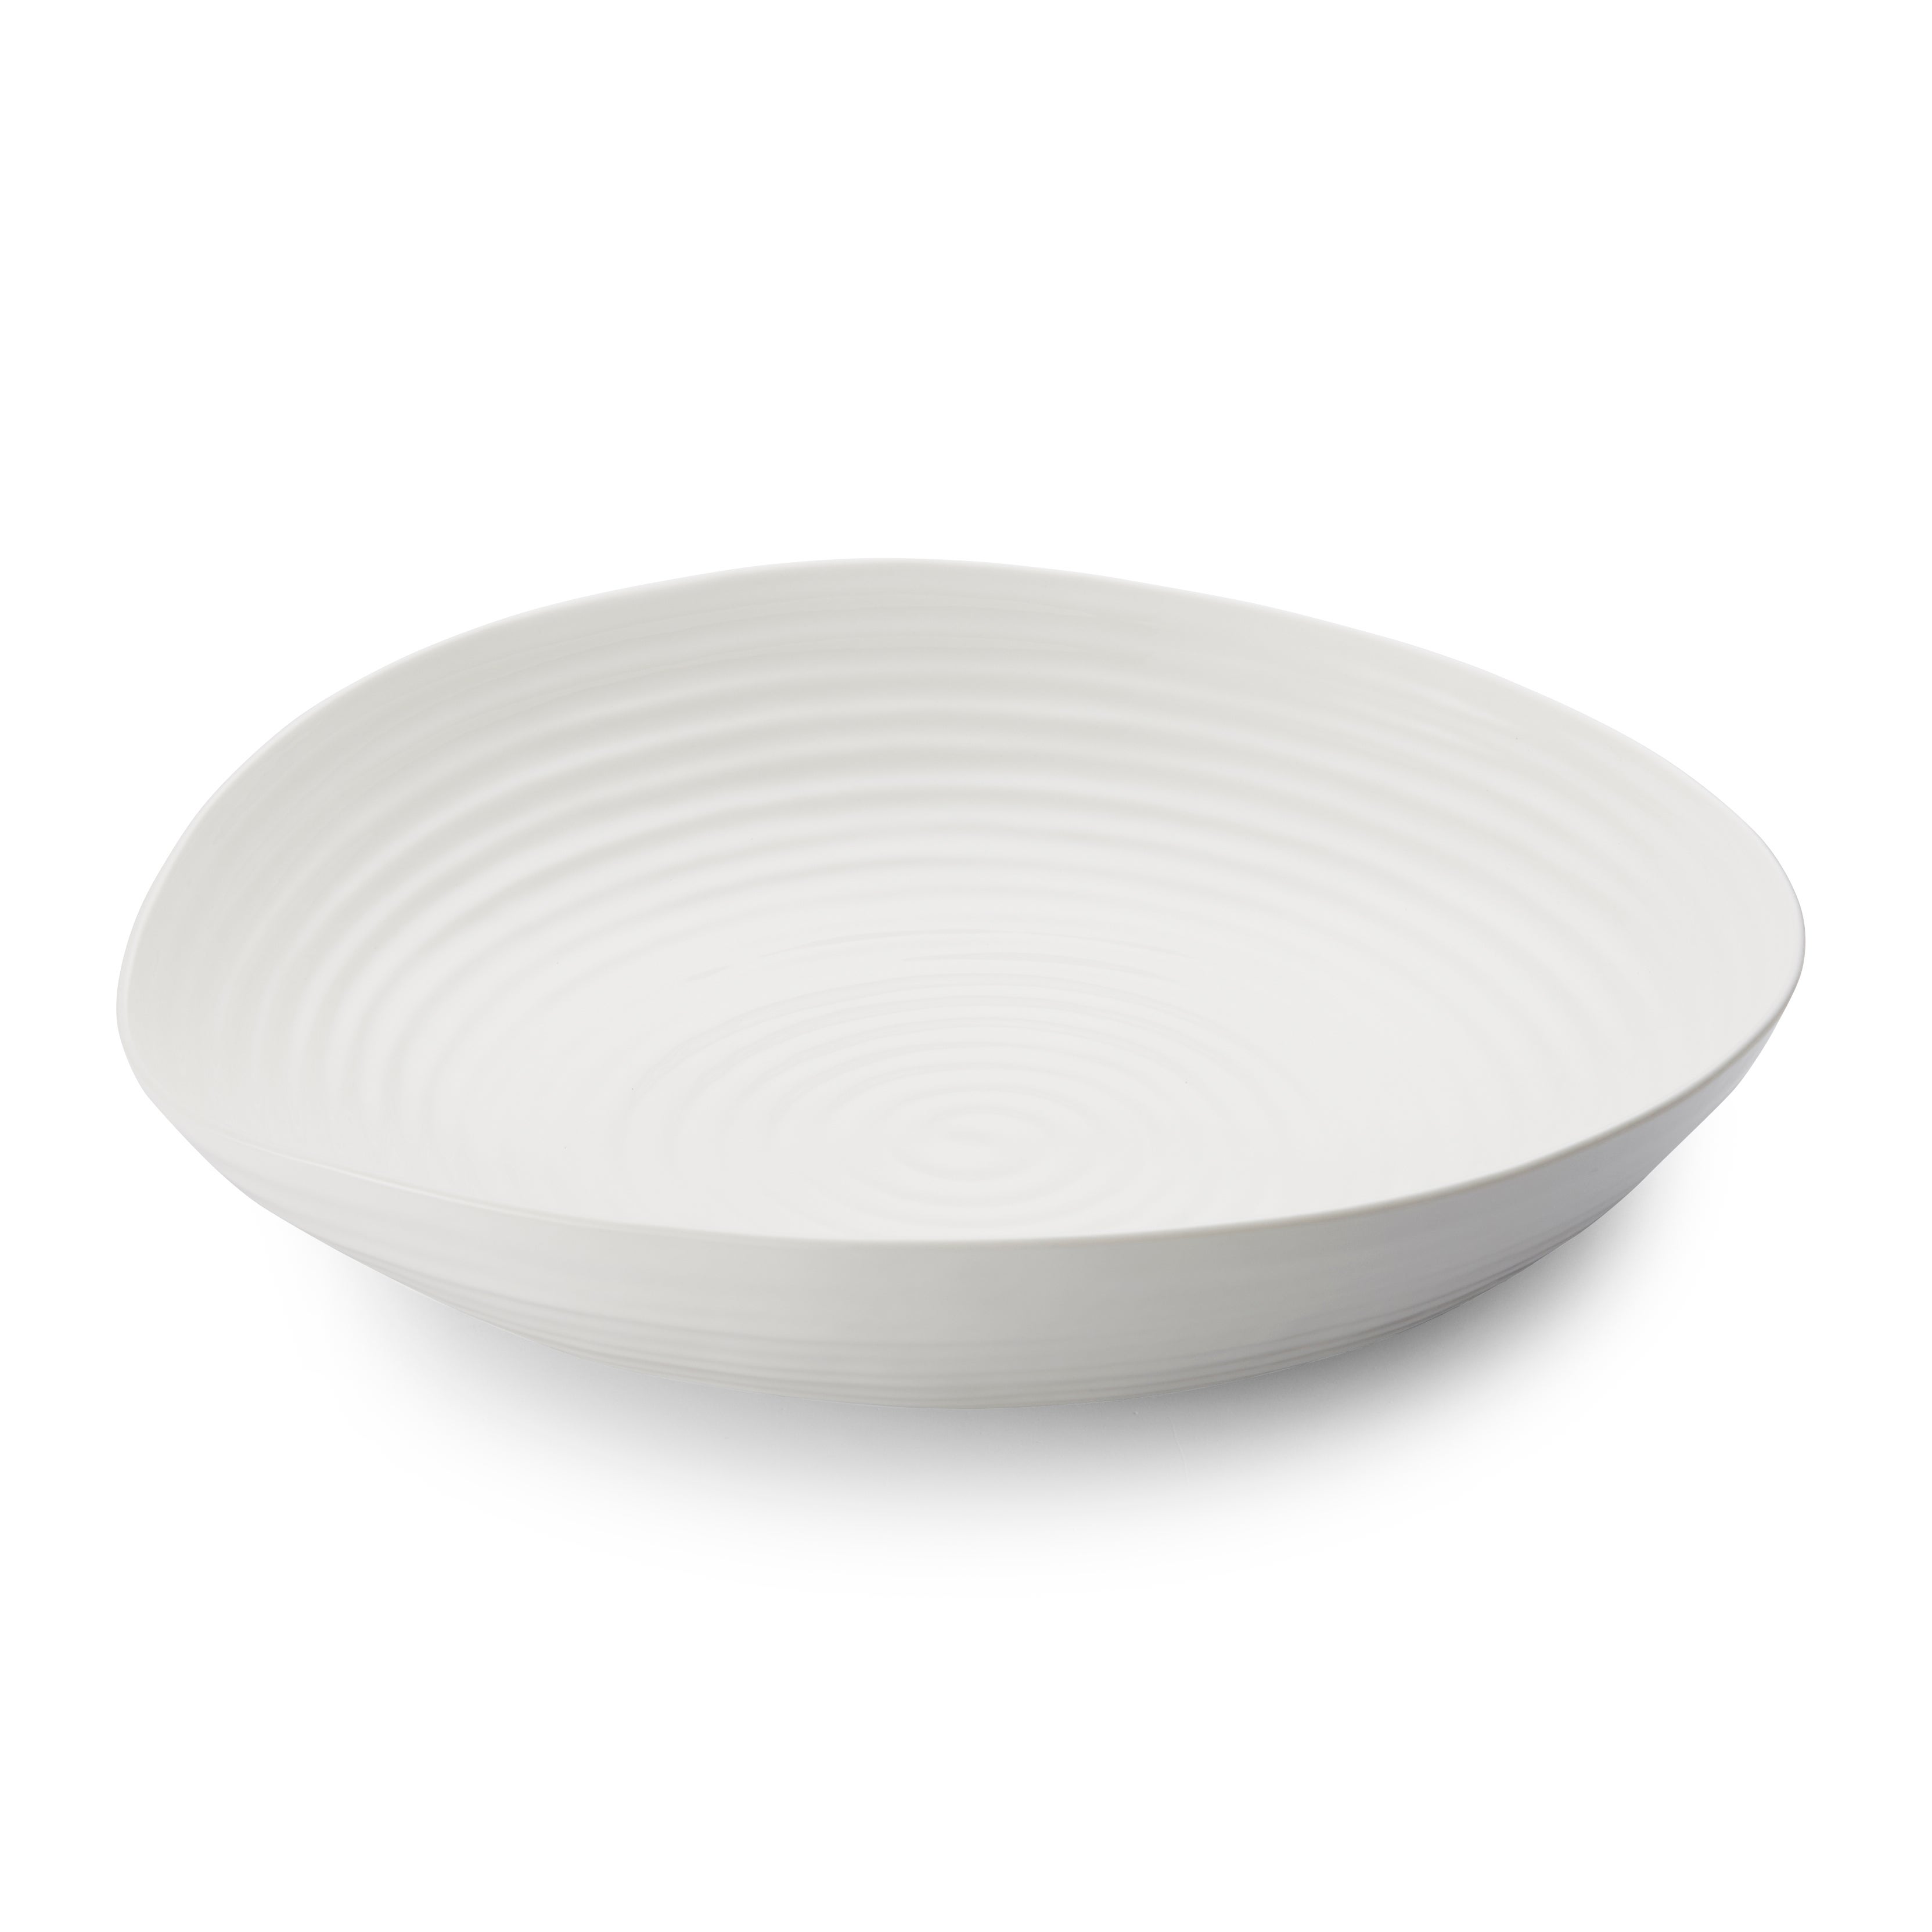 Photos - Salad Bowl / Serving Platter Sophie Conran for Portmeirion Statement Bowl White